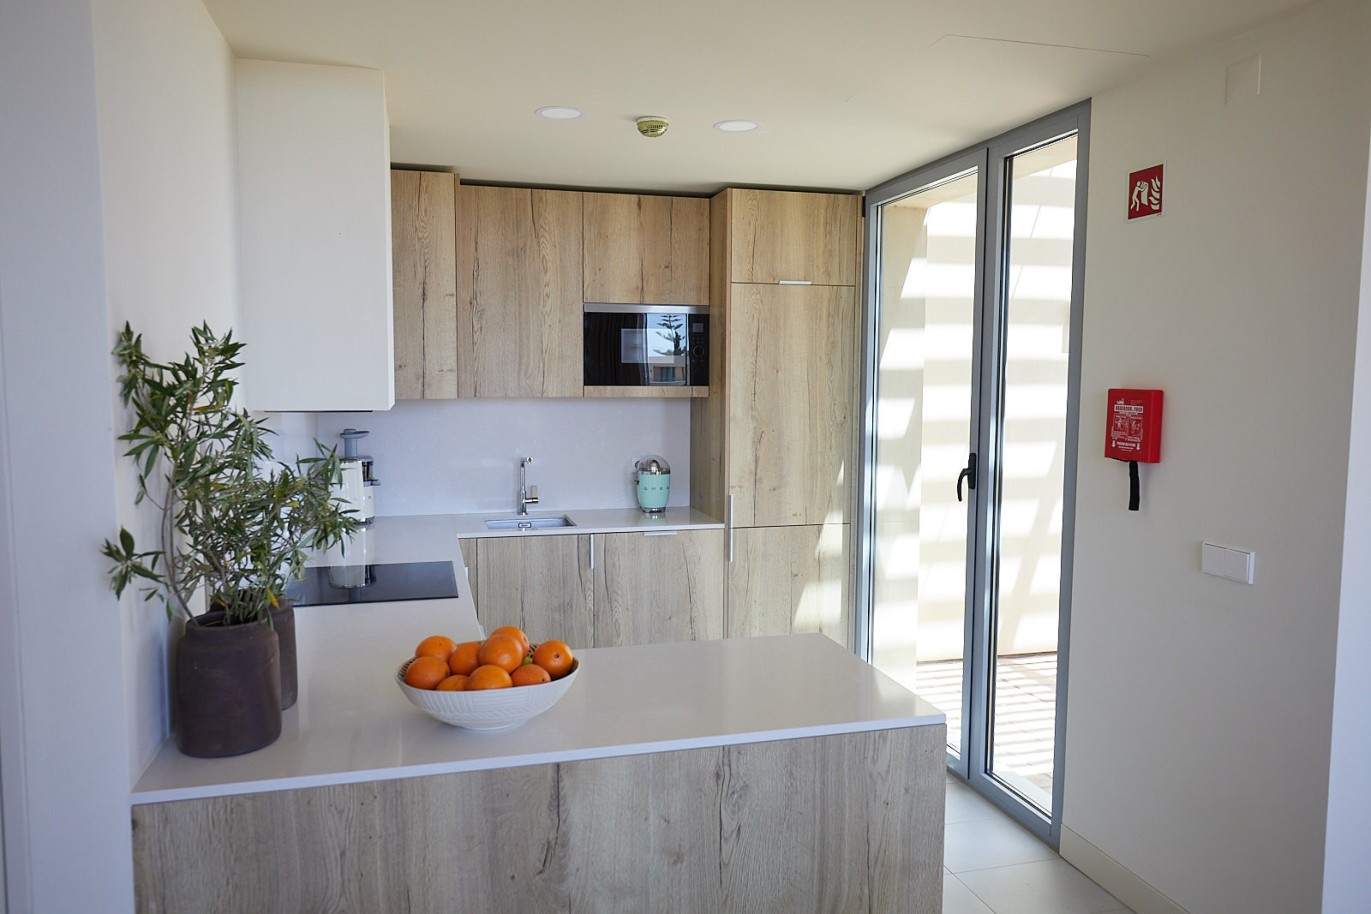 2 bedroom apartment in resort, for sale in Porches, Algarve_229258